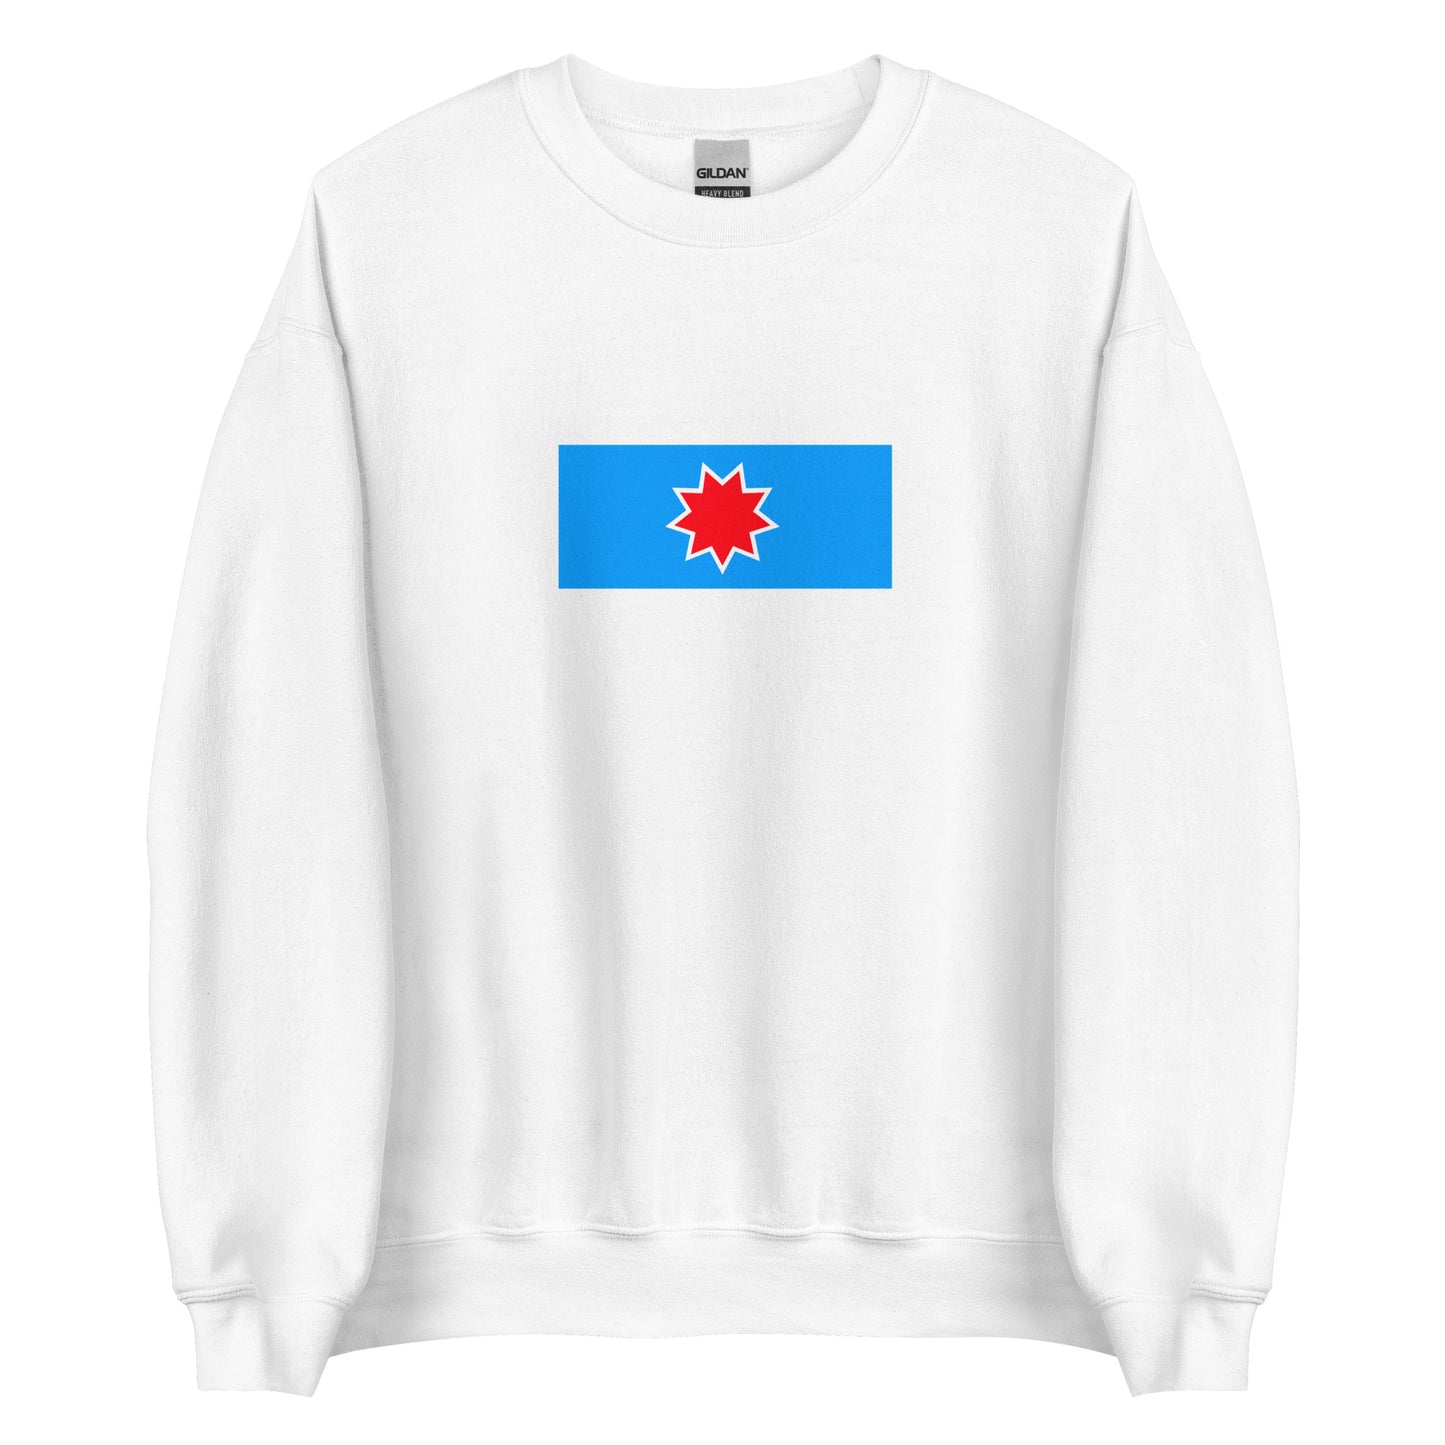 Japan - Orok people | Ethnic Flag Unisex Sweatshirt